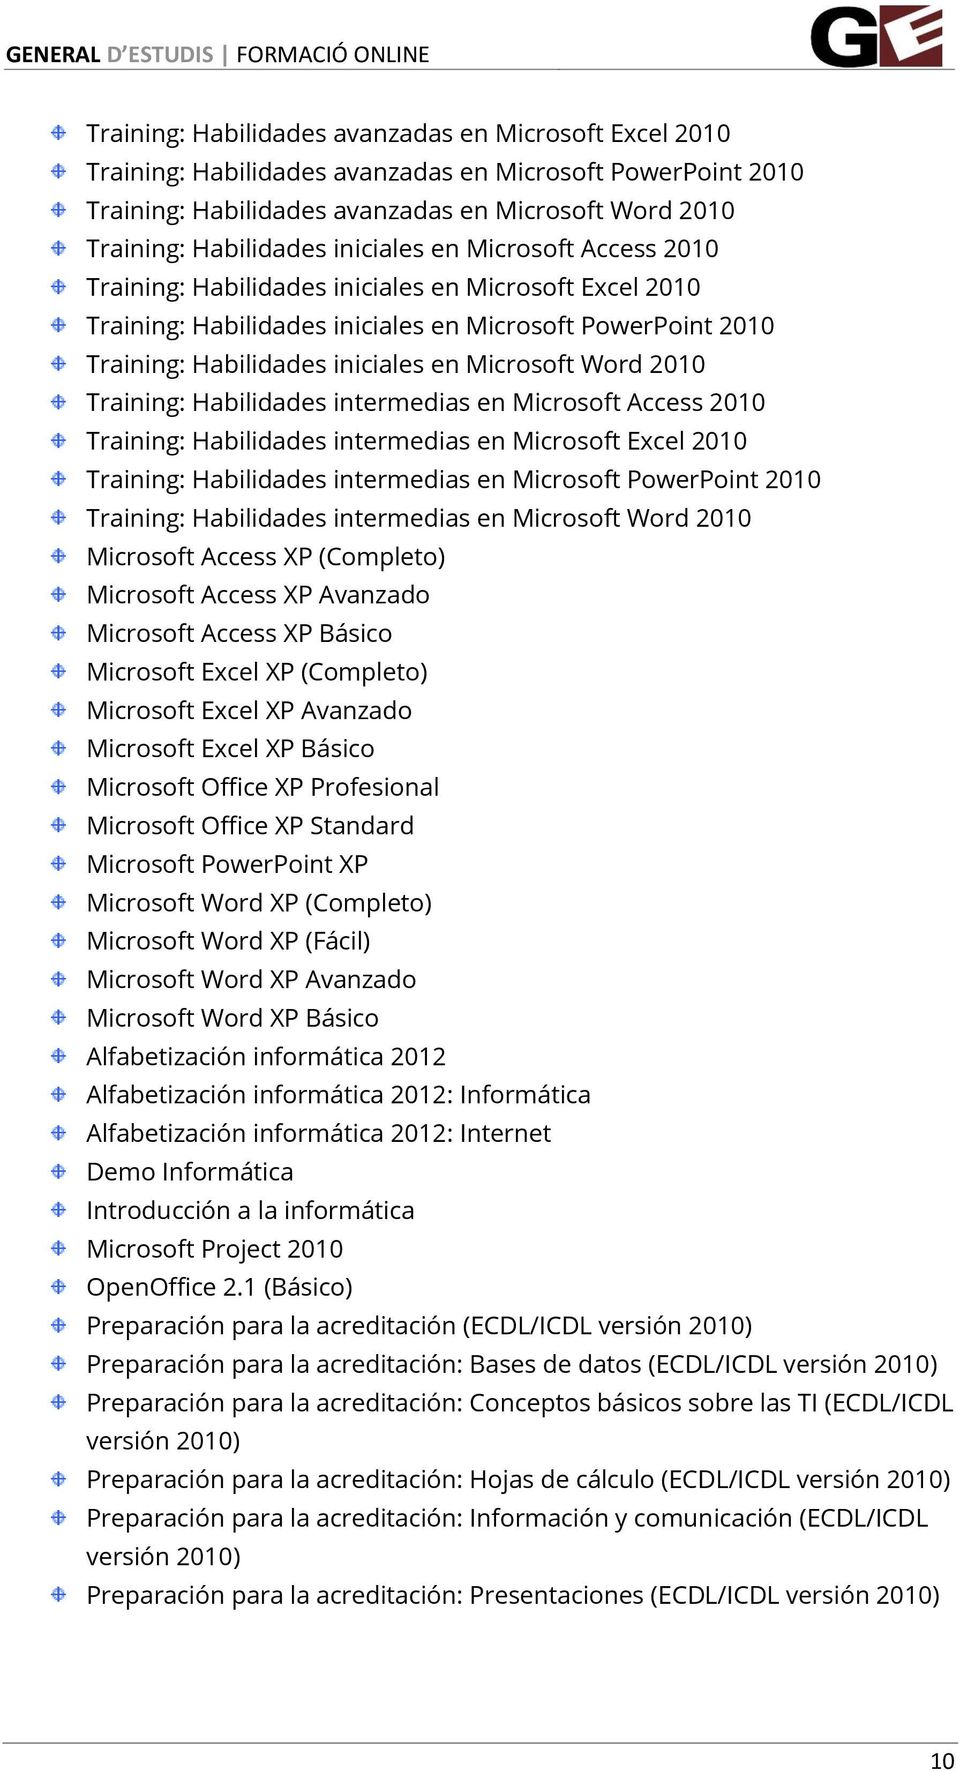 Word 2010 Training: Habilidades intermedias en Microsoft Access 2010 Training: Habilidades intermedias en Microsoft Excel 2010 Training: Habilidades intermedias en Microsoft PowerPoint 2010 Training: